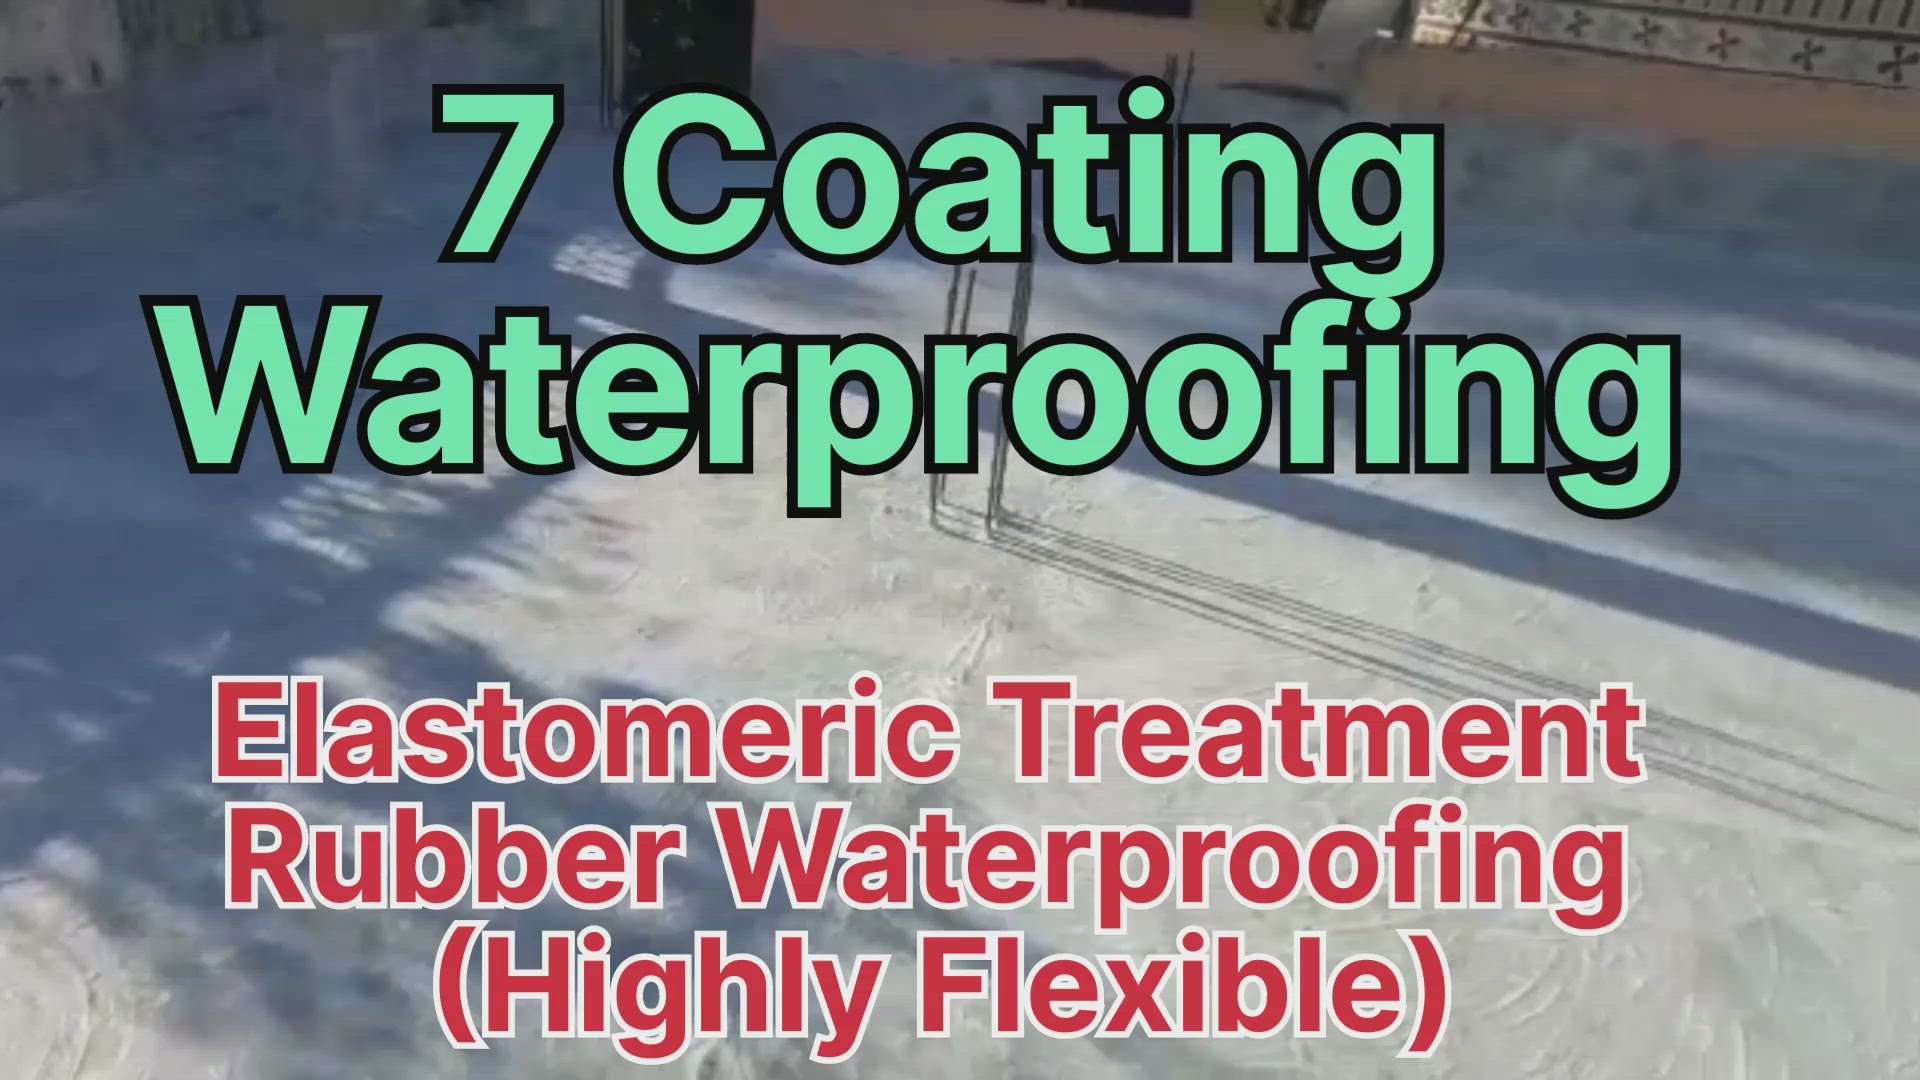 #waterproofing 
#homedecor
#kitchenwaterproofing